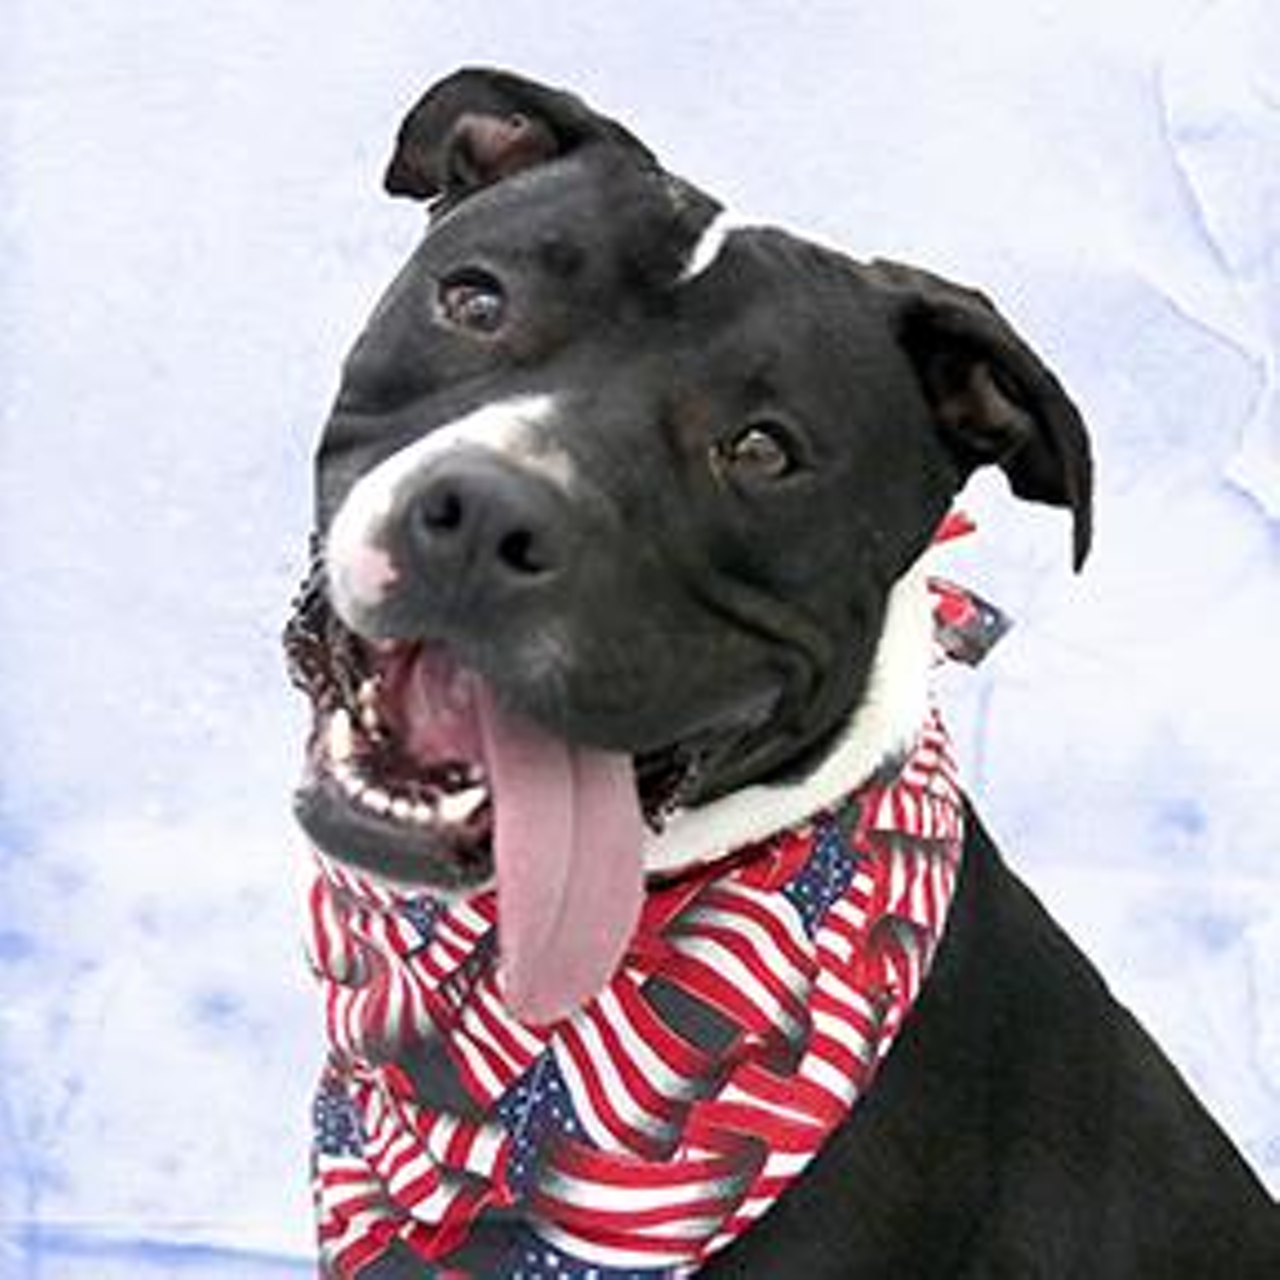 Name: Hank | Breed: Terrier/American Pit Bull/ Mix | Age: 2.5 years old | Sex: Male | Rescue: SPCA Cincinnati